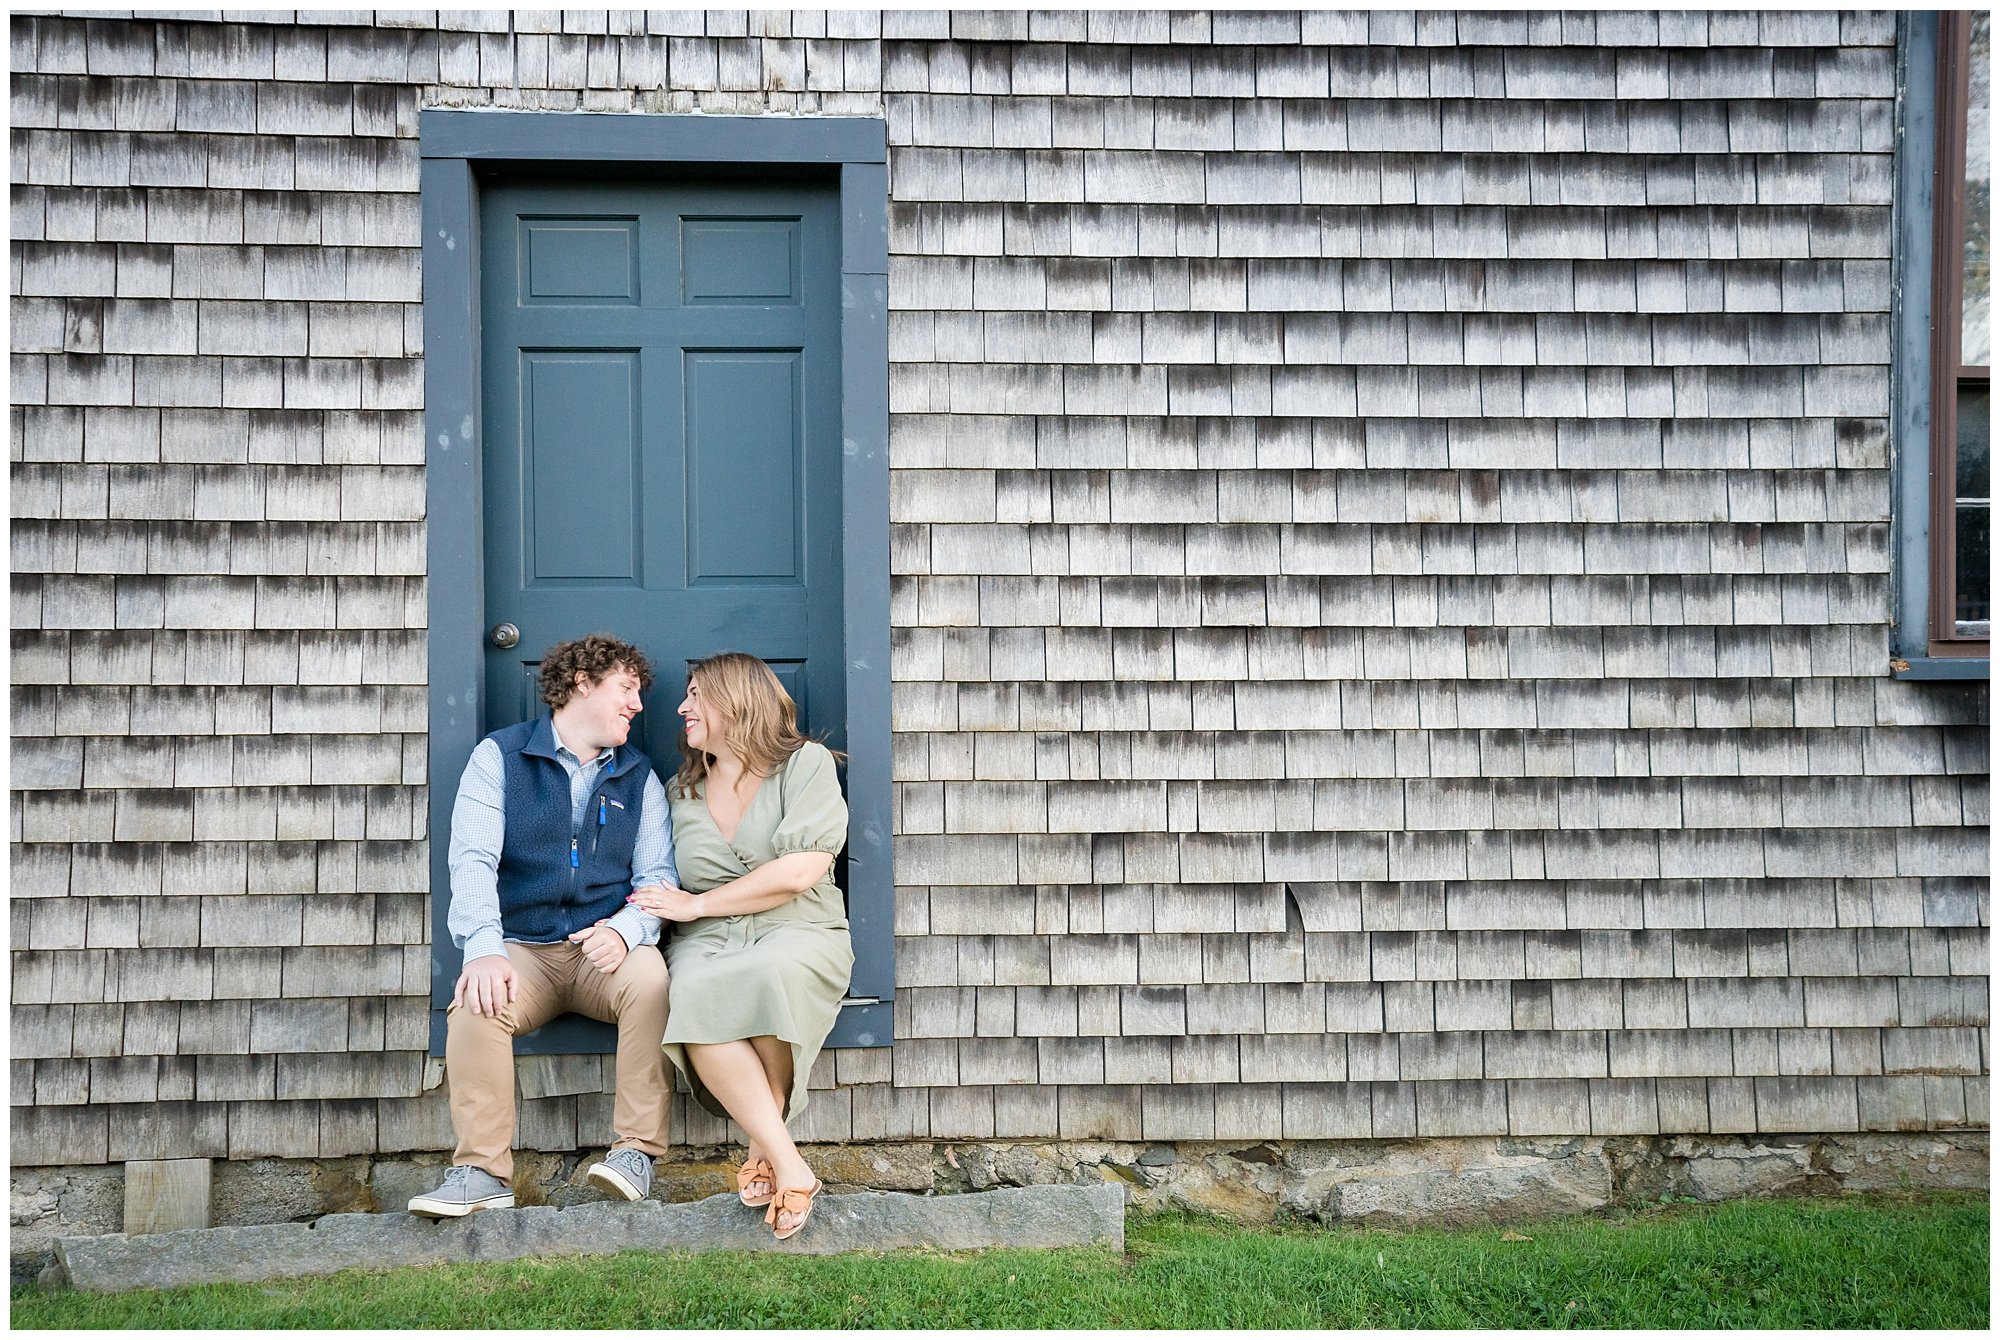 Prescott Park Engagement Photographer, New Hampshire Wedding Photographer, Two Adventurous Souls- 092722_0012.jpg